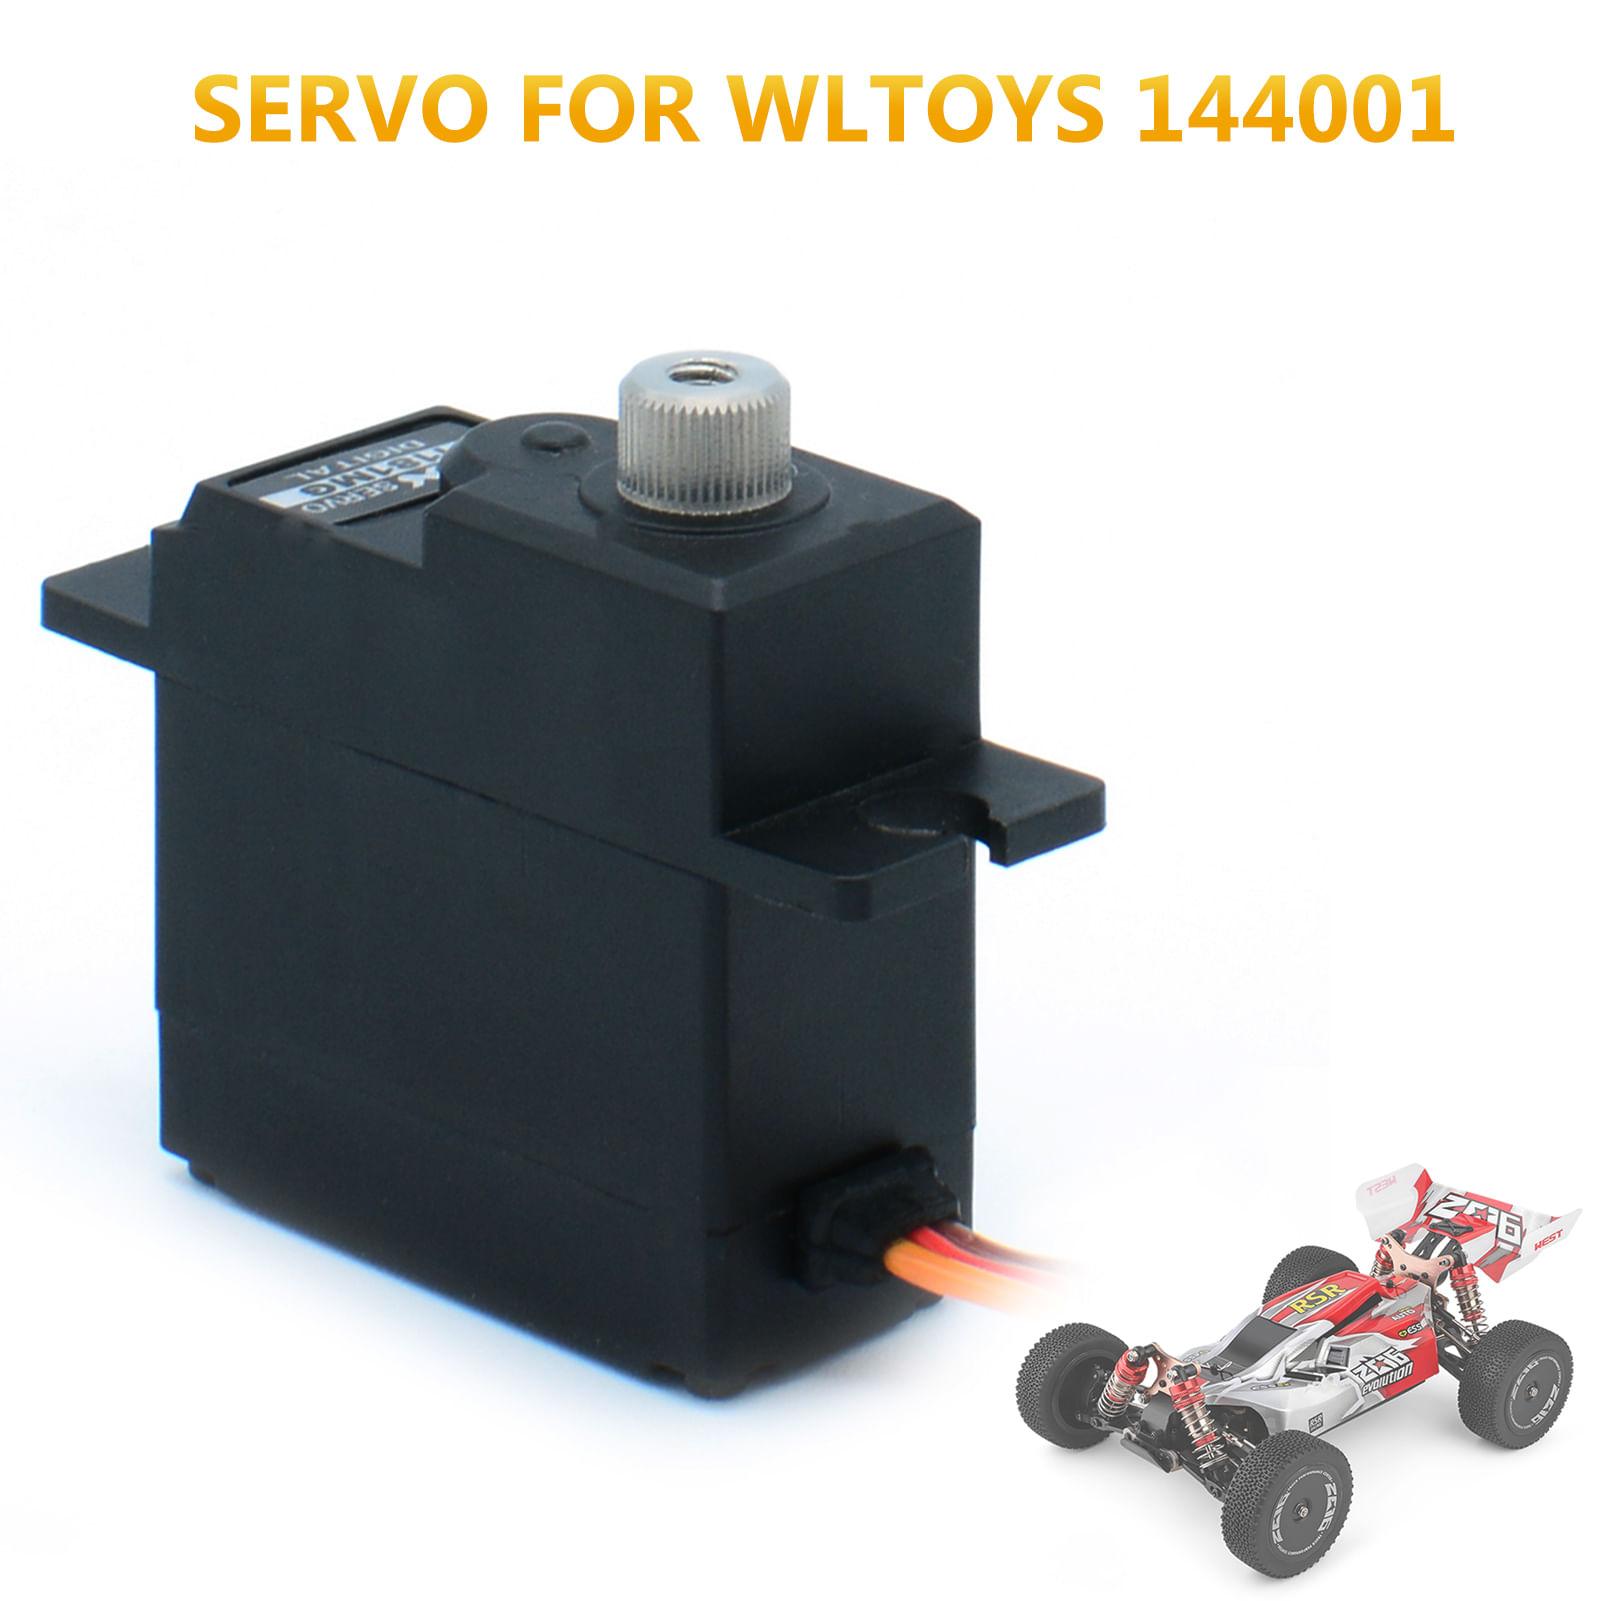 3.5KG Servo Compatible con Wltoys 144001 wpl Coche RC B1 B16 Tomtop RM13794 PDI-1181MG 3.5KG Black